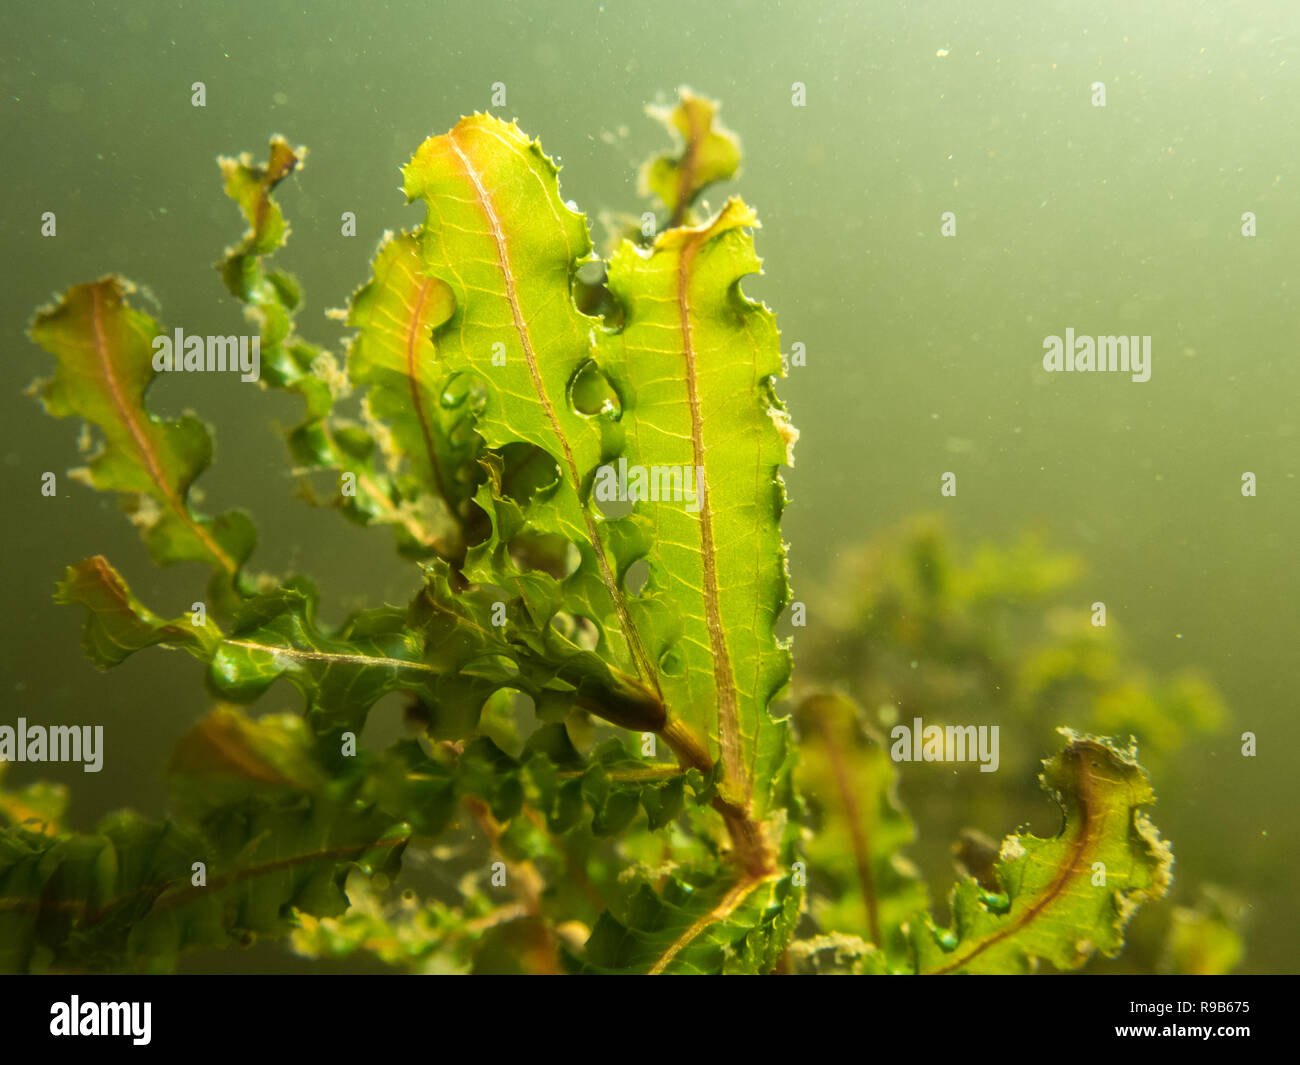 Curled pondweed (Potamogeton crispus) aquatic plant leaf close-up shot. Stock Photo